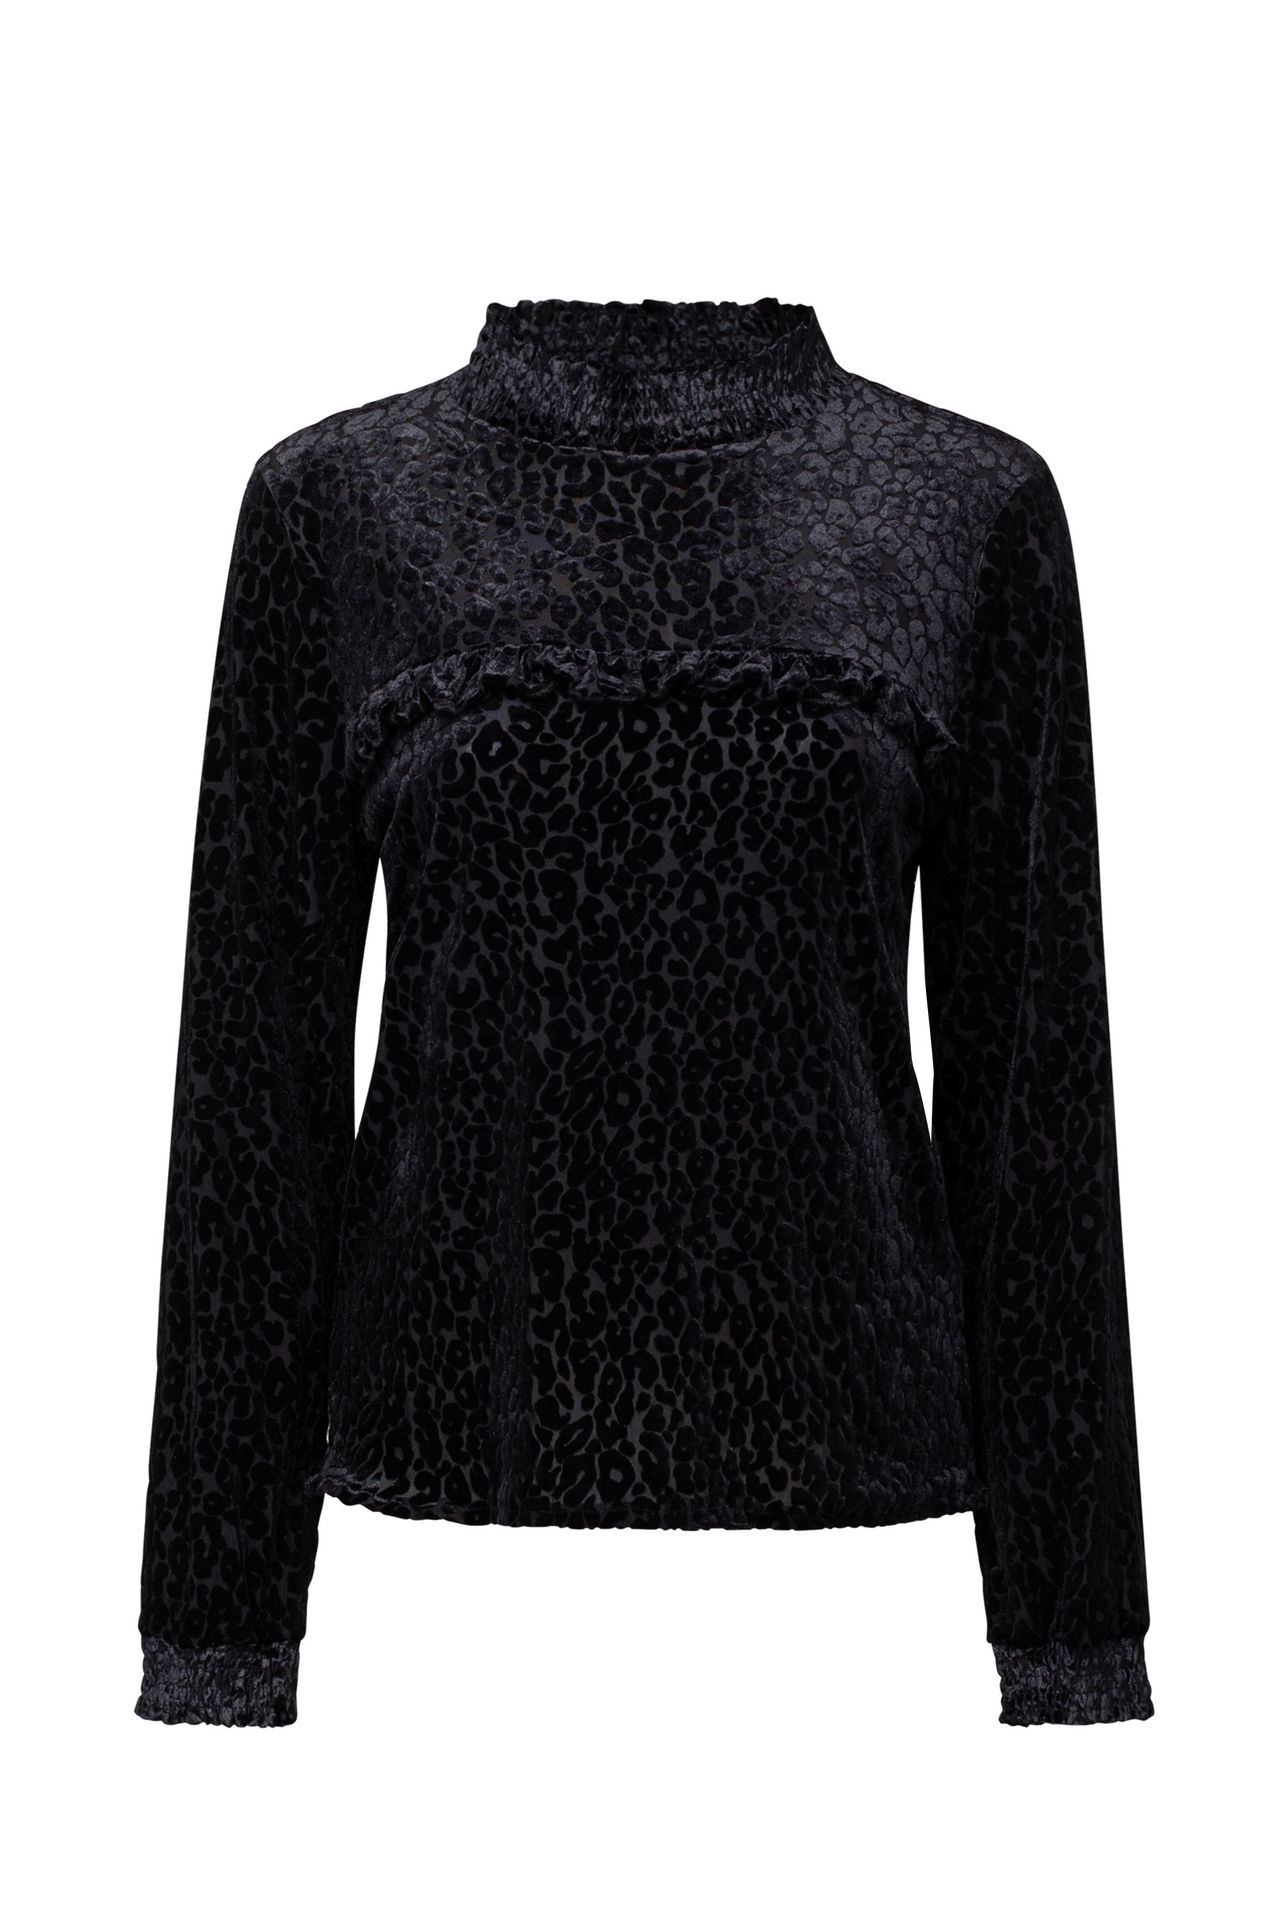 Norah Shirt - Feest collectie black 211873-001